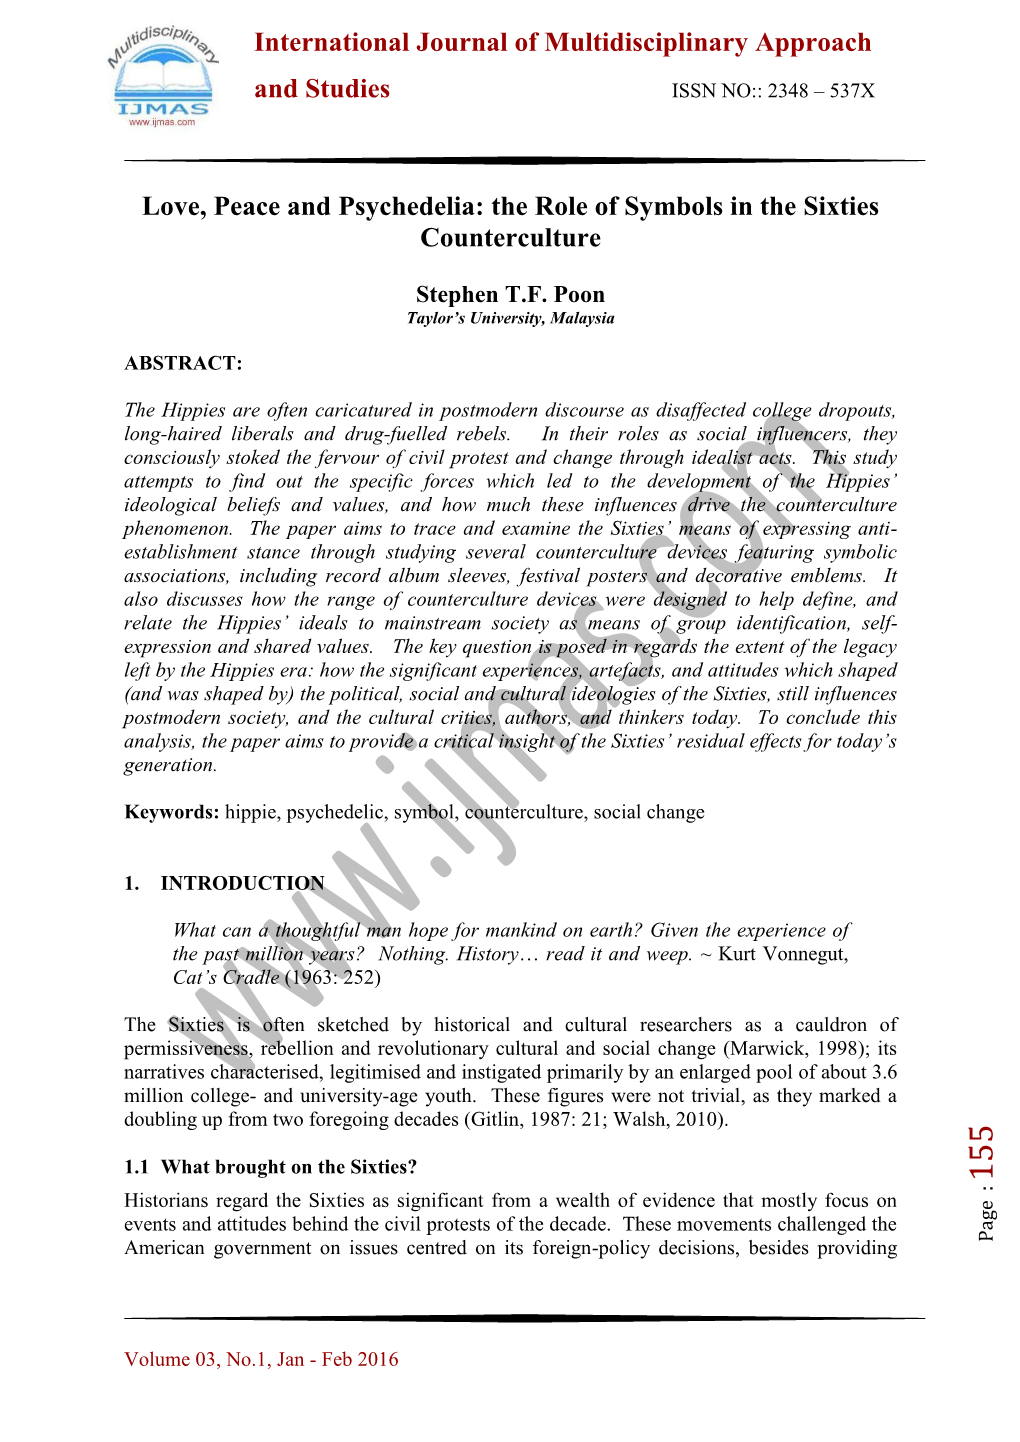 International Journal of Multidisciplinary Approach And